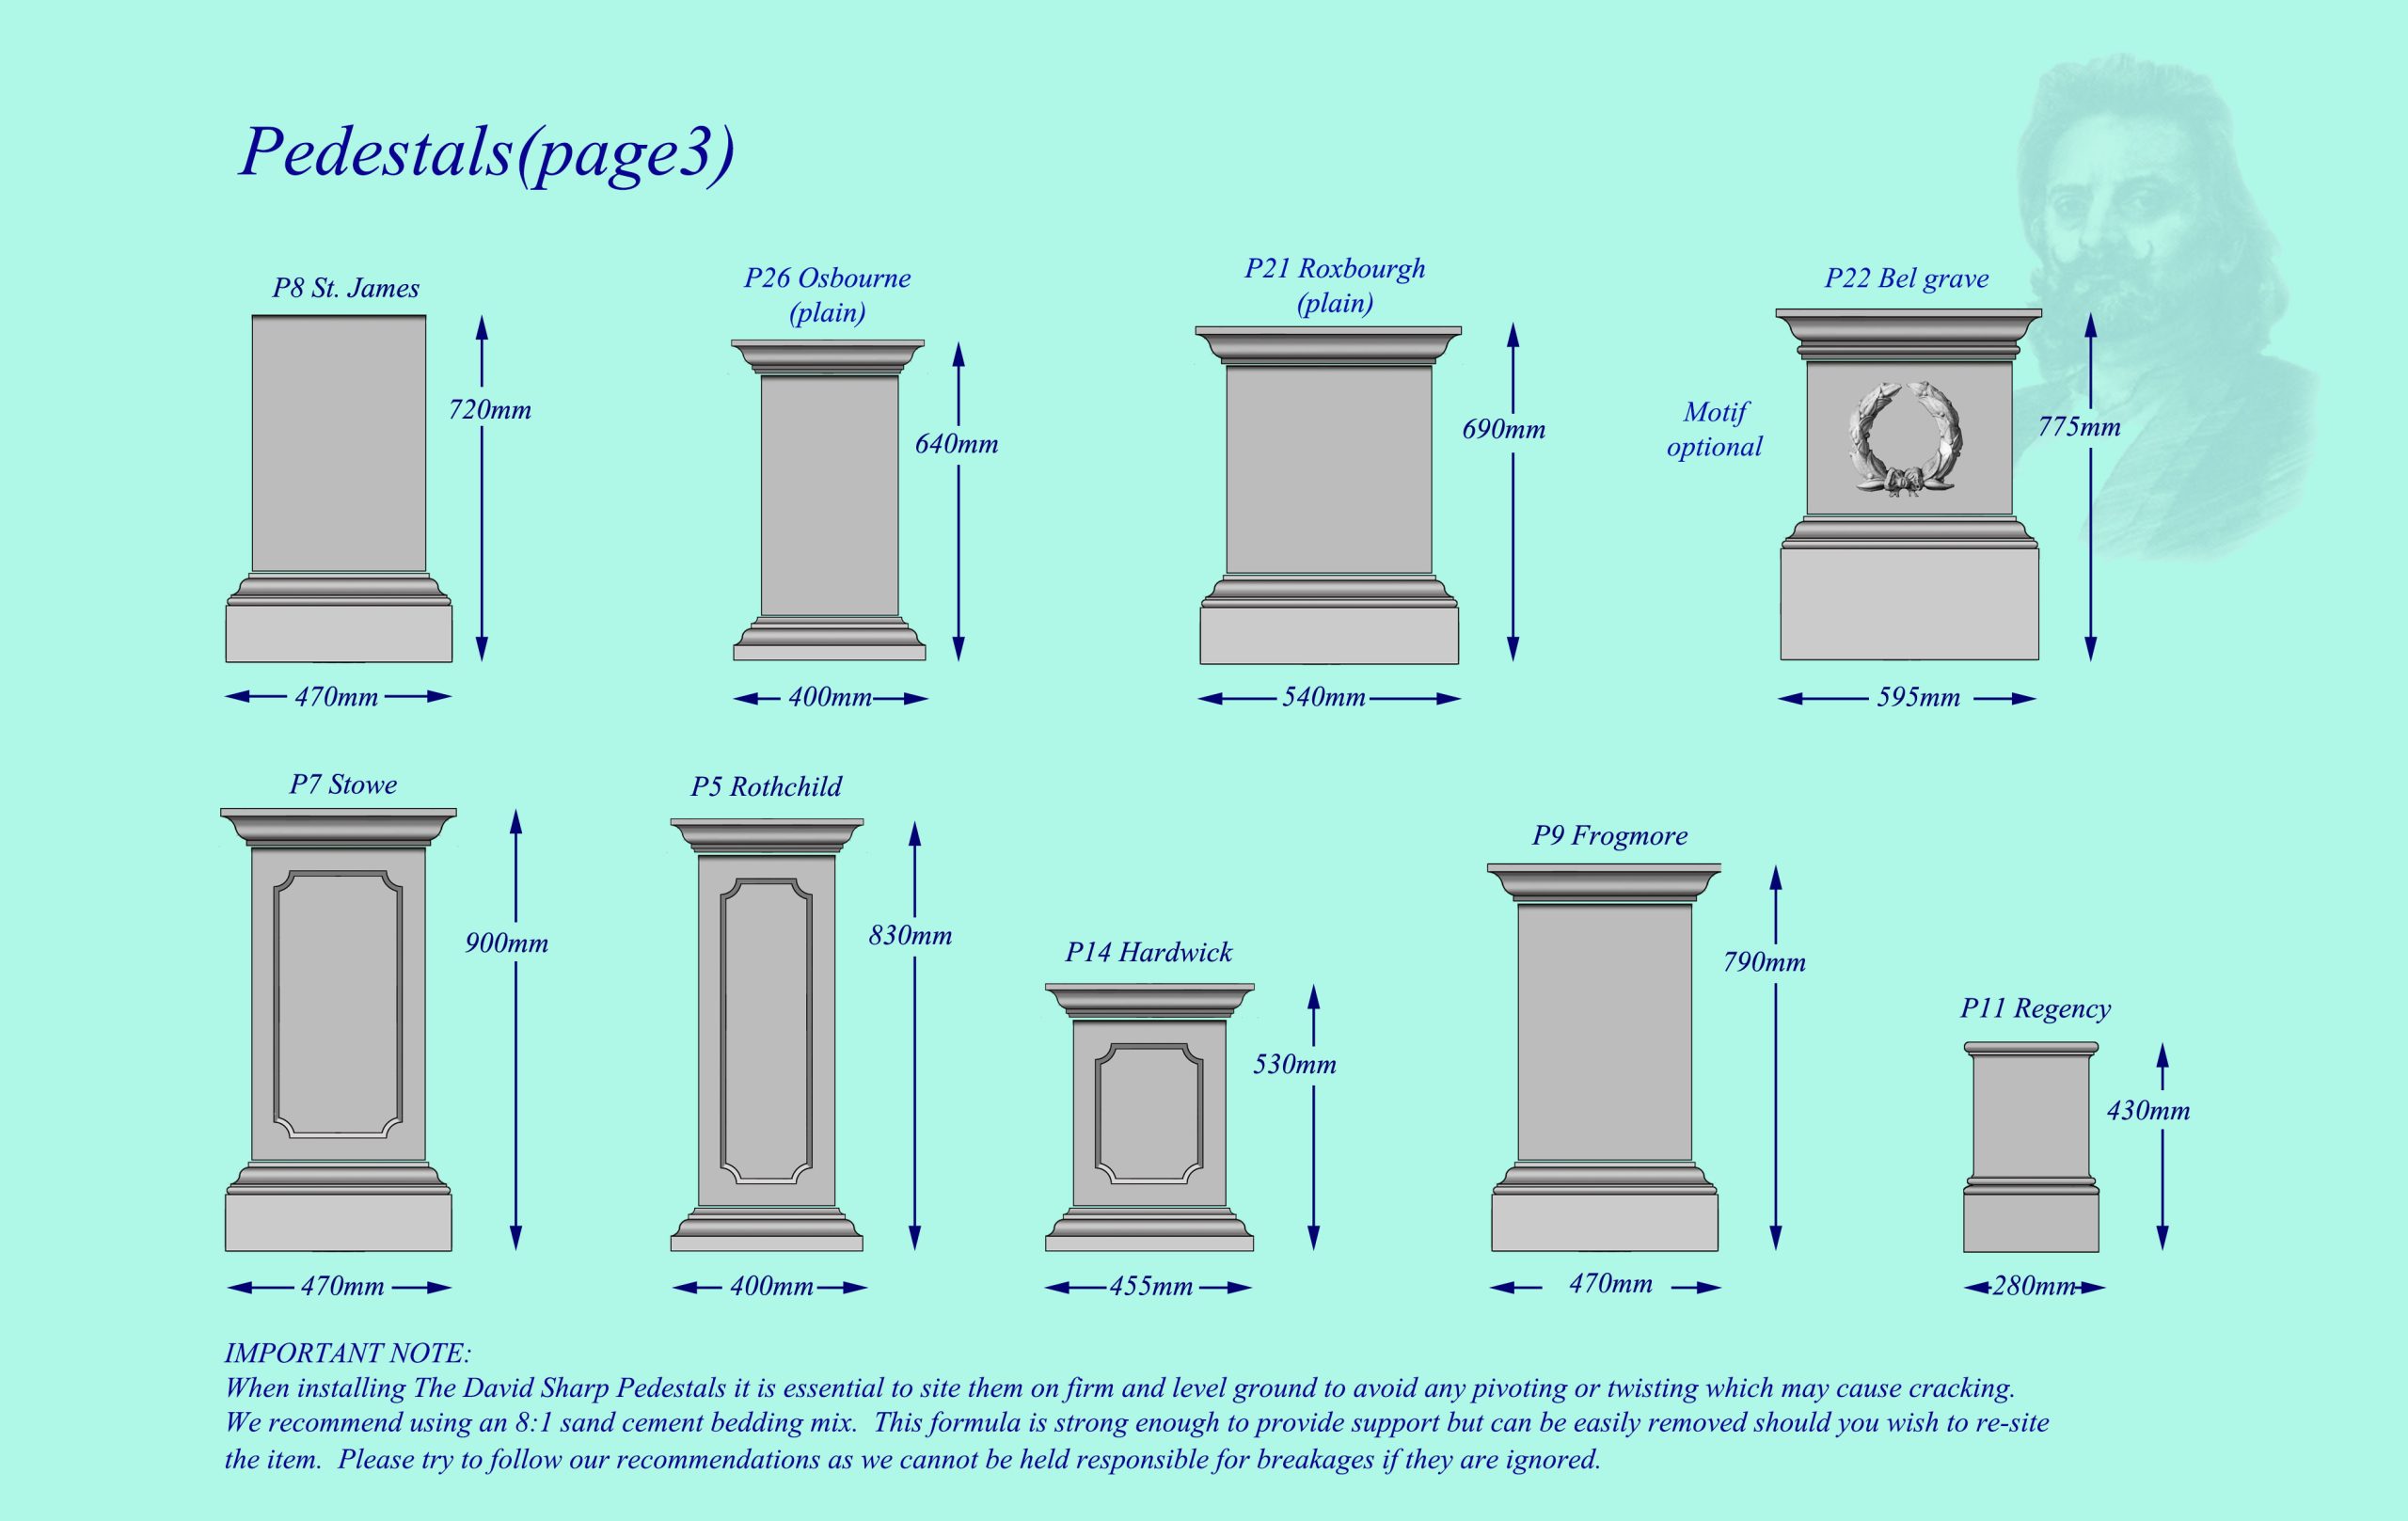 garden stone pedestal rothschild, belgrave, osbourne,st james, roxburough, hardwick